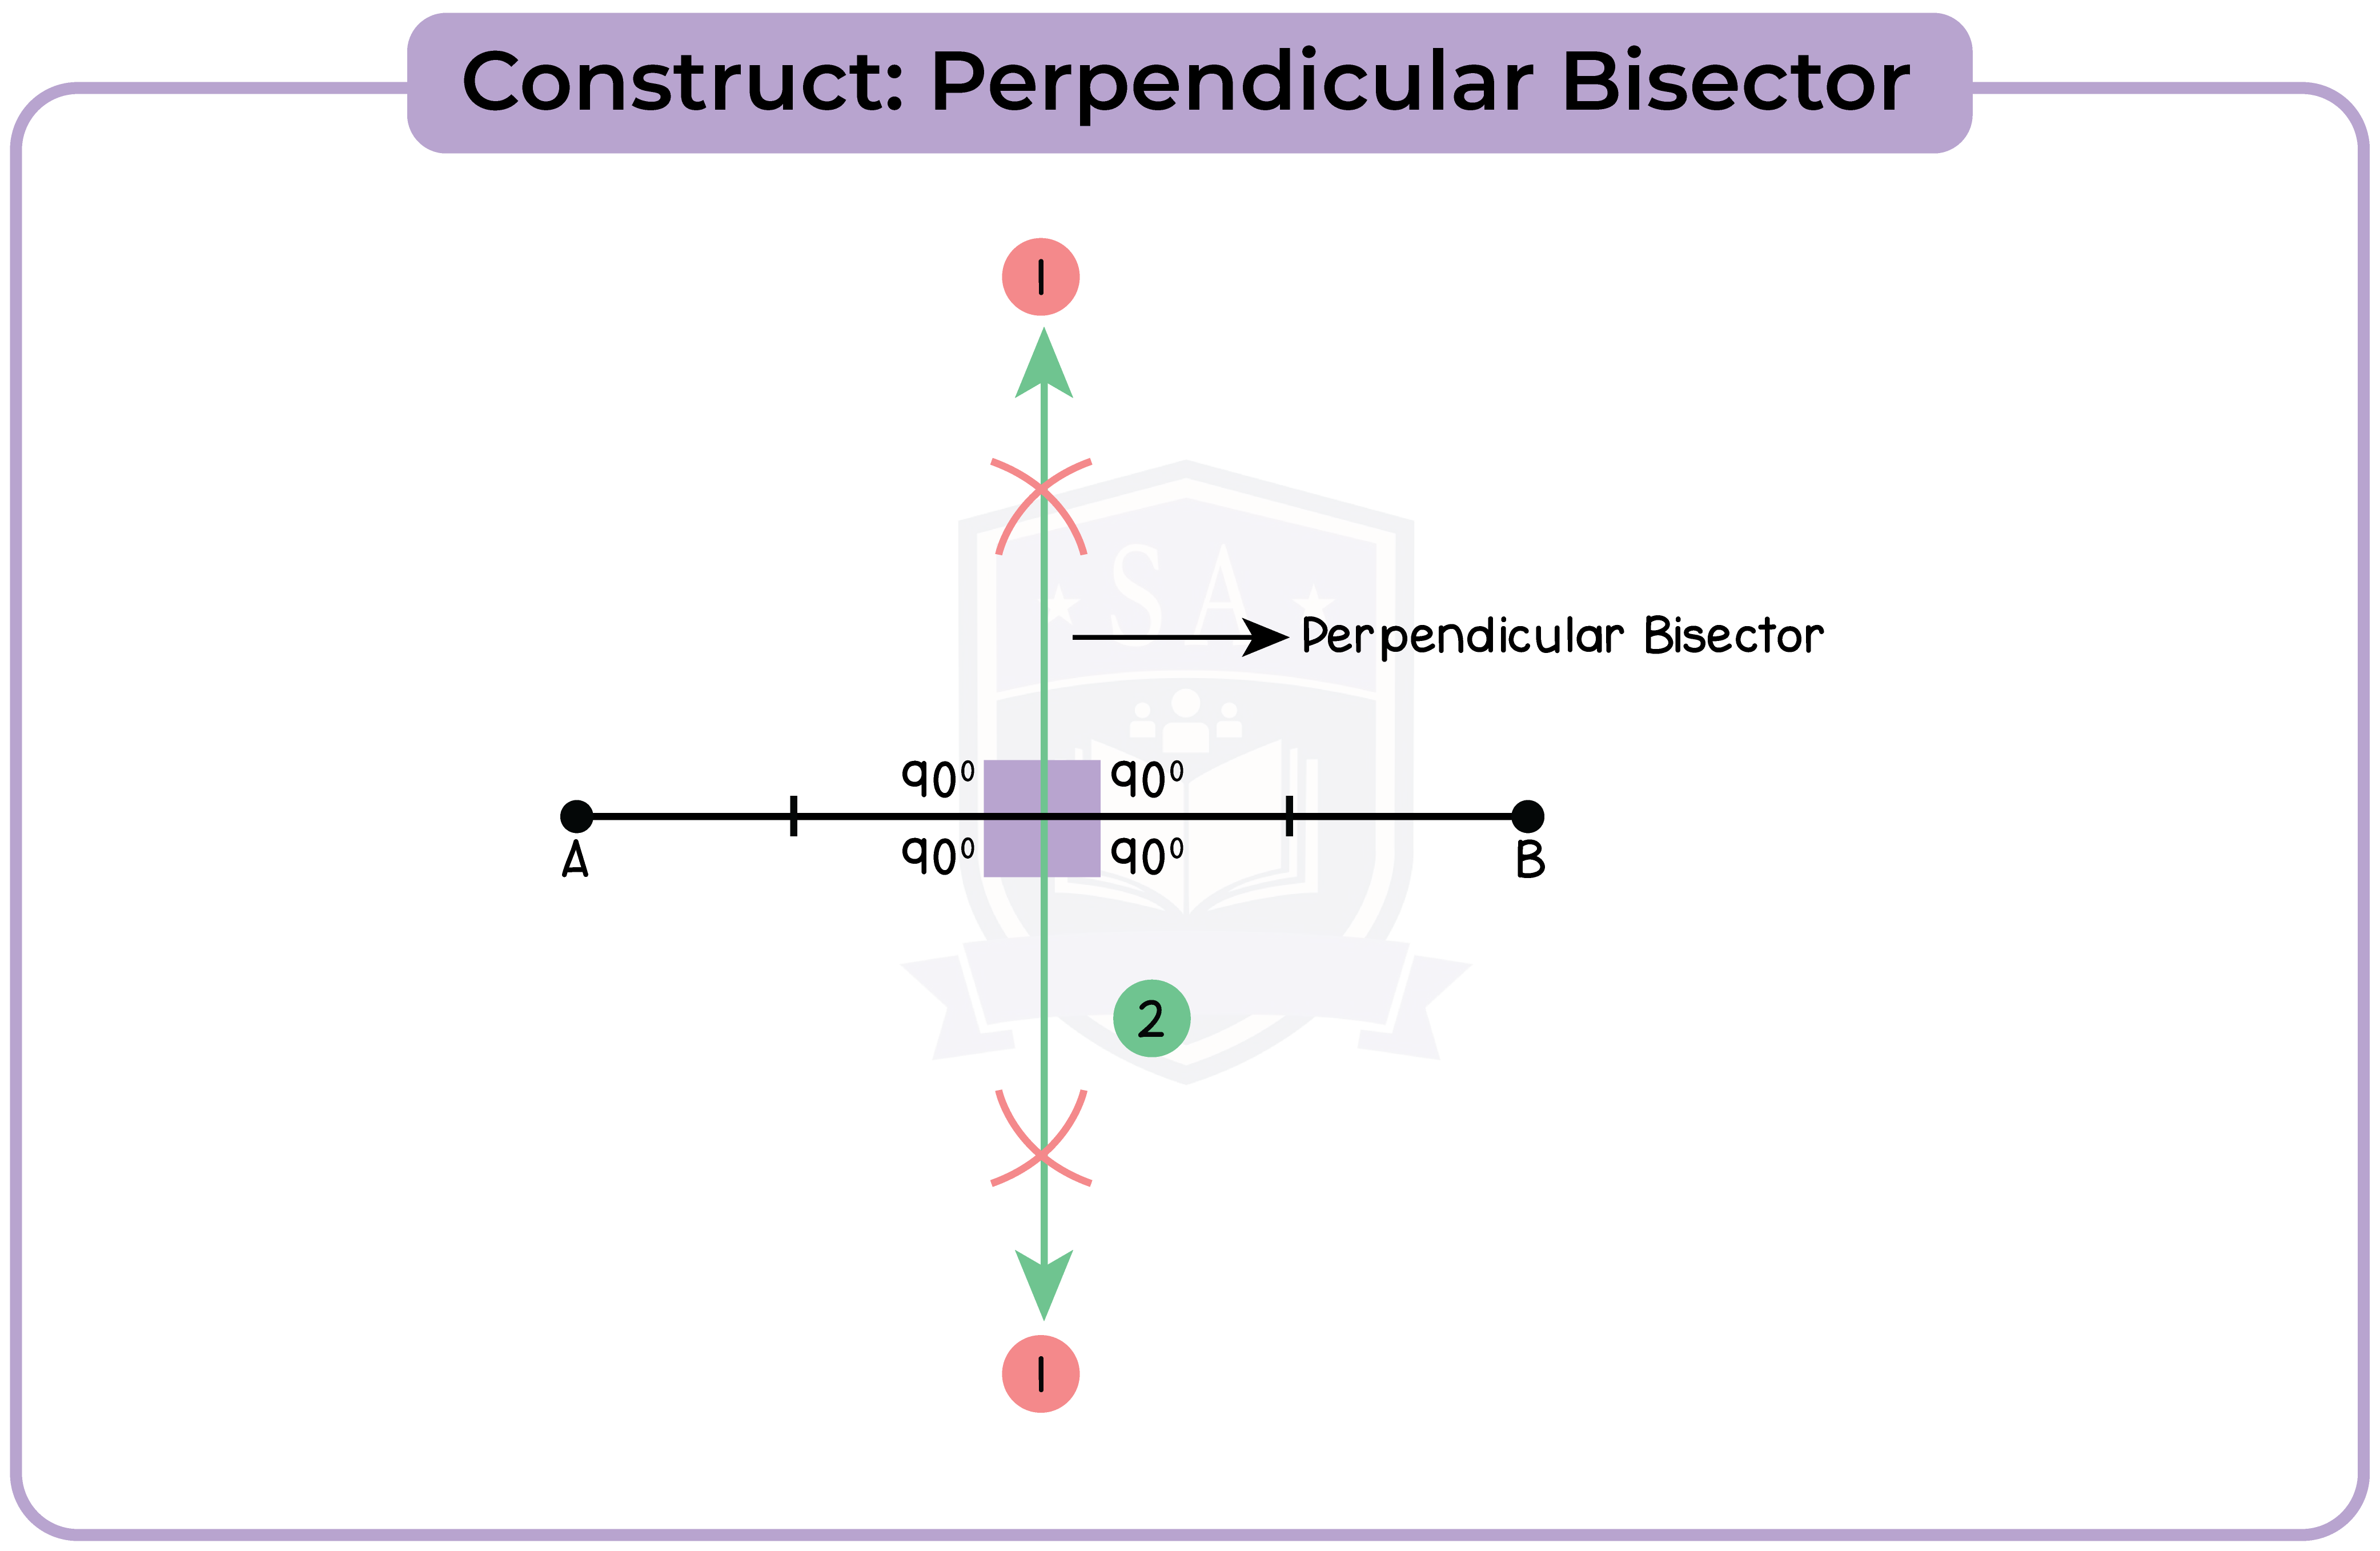 edexcel_igcse_mathematics a_topic 29_construction_002_Perpendicular Bisector_